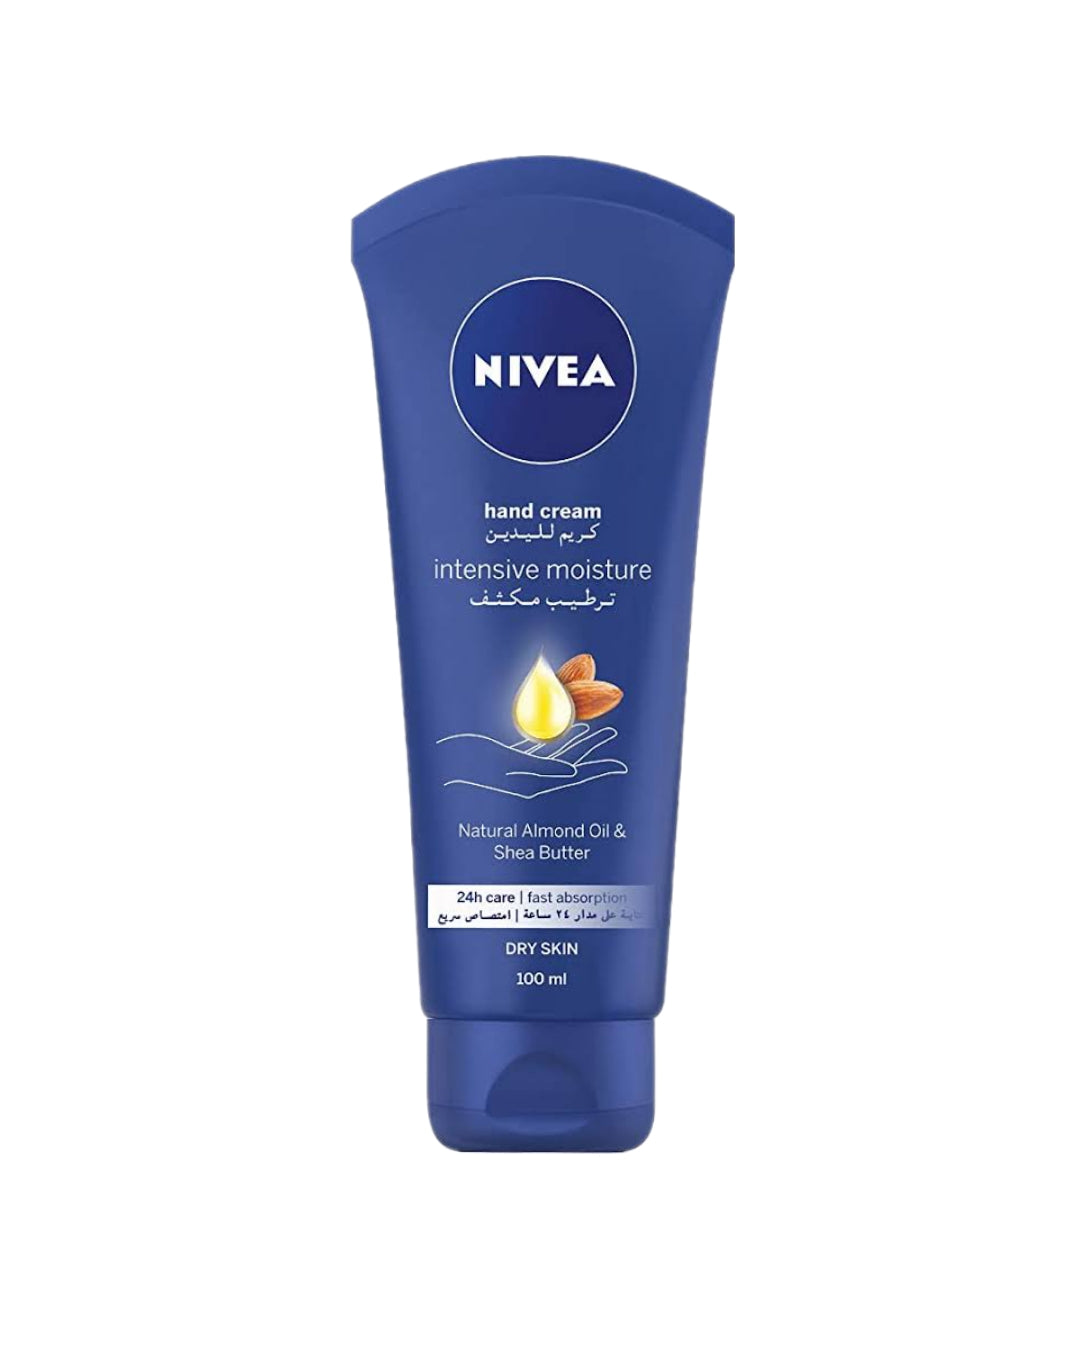 Nivea Hand Cream Intensive Moisture Natural Almond Oil & Shea Butter Dry Skin